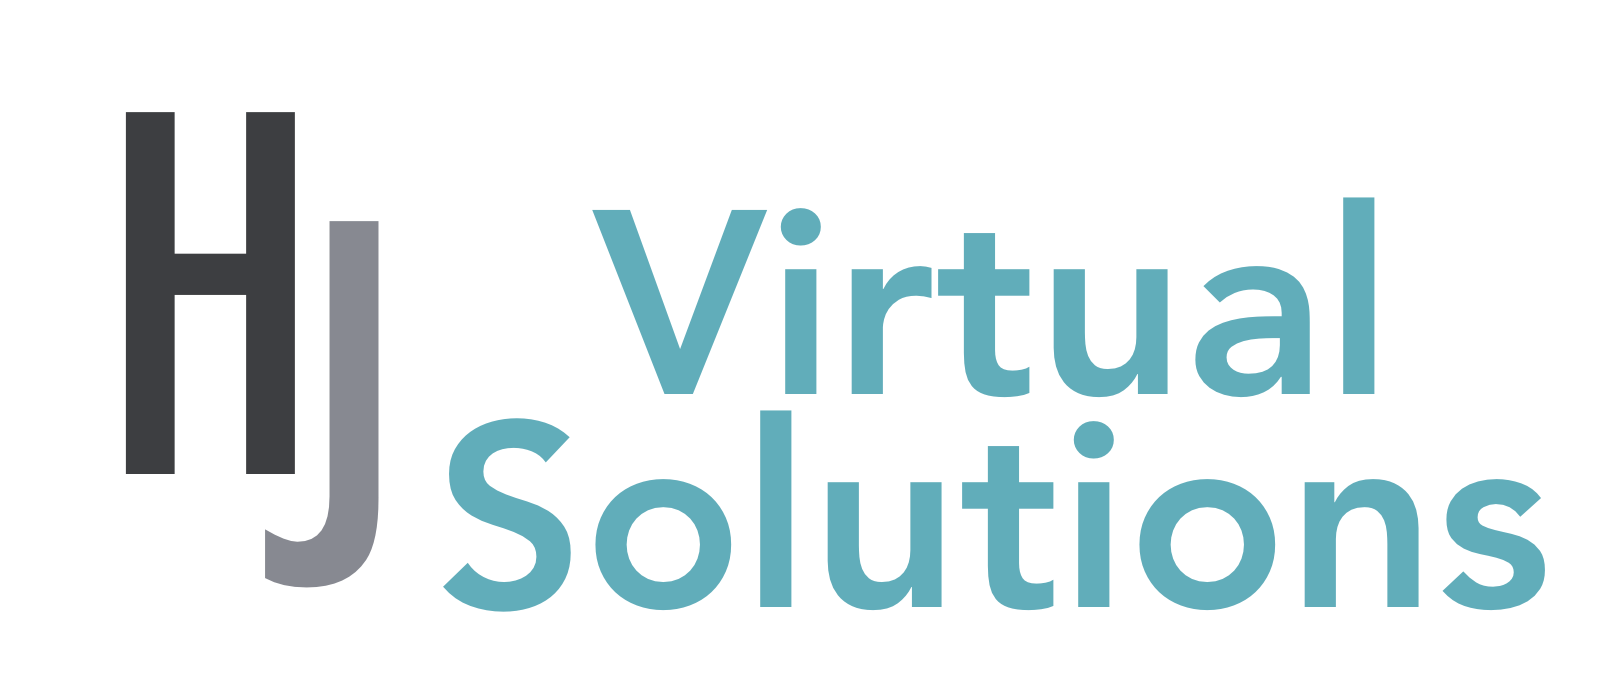 HJ Virtual Solutions